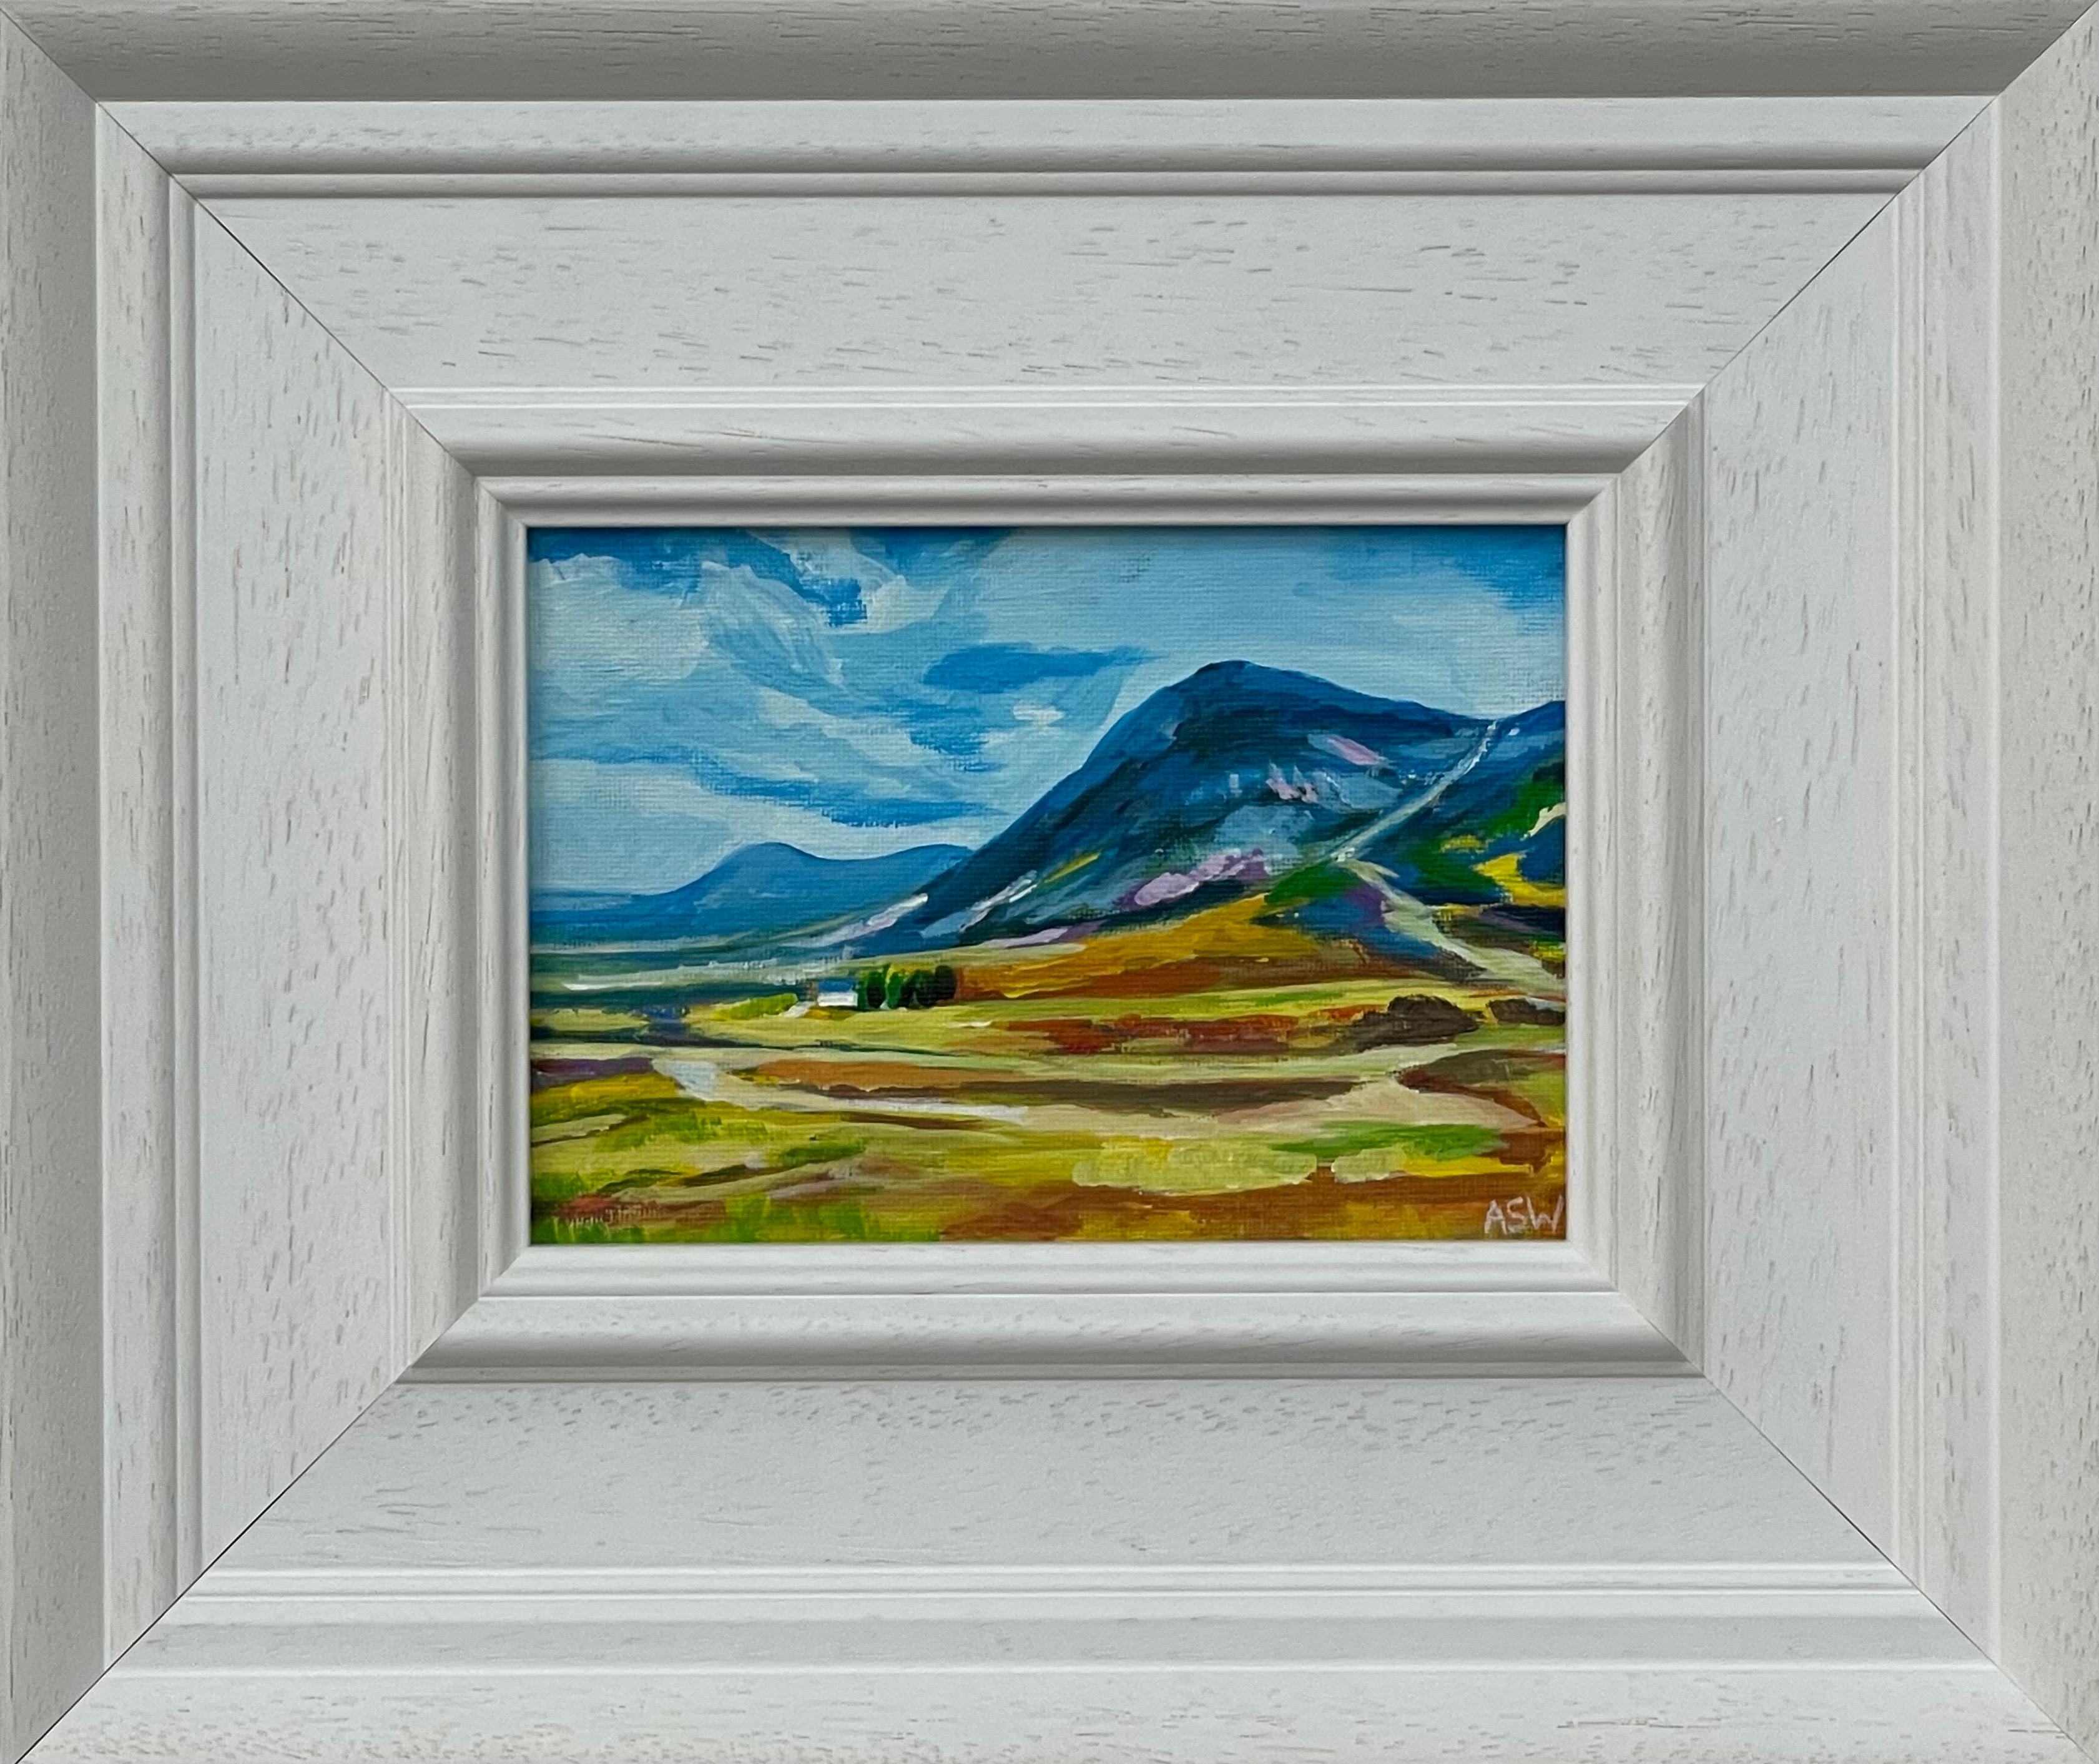 Angela Wakefield Landscape Painting - Miniature Landscape Study of Scottish Highlands by Contemporary British Artist